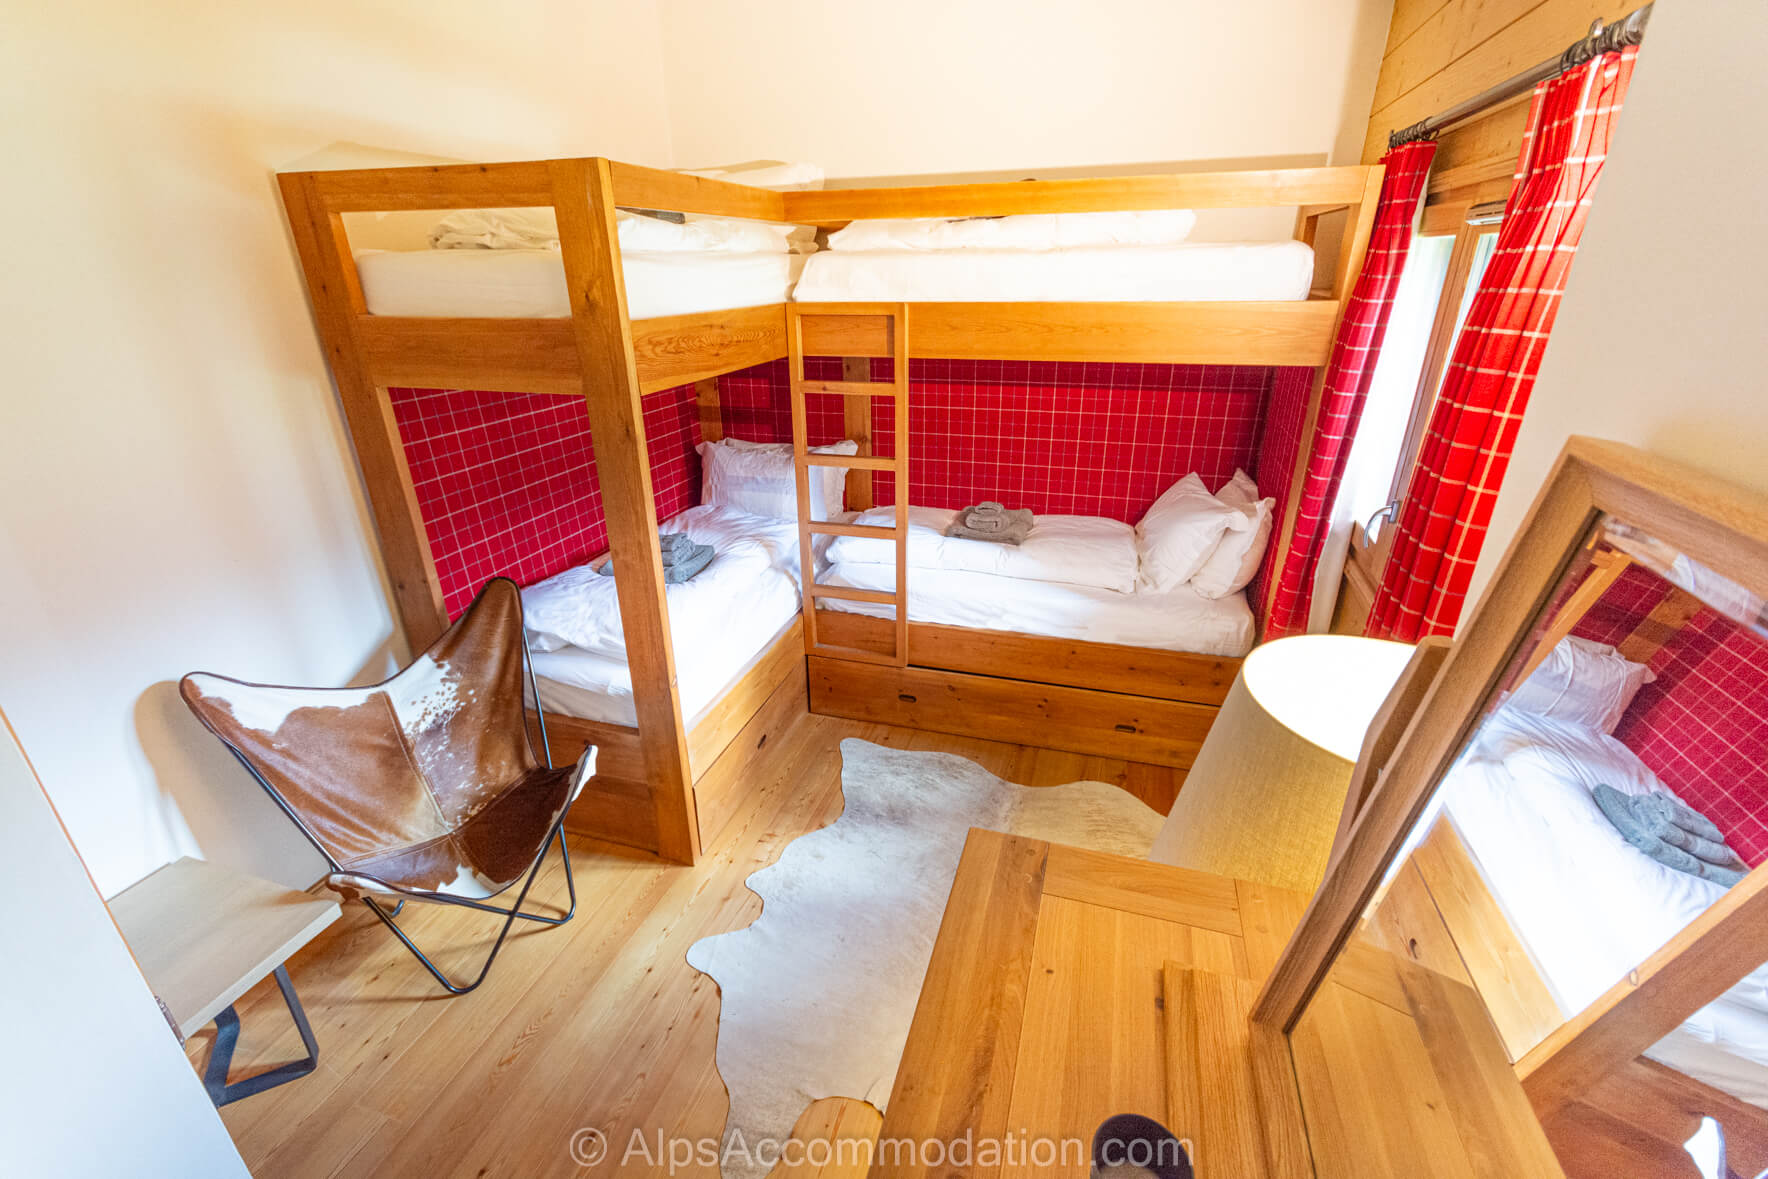 Chardons Argentes G6 Samoëns - Quad bedroom with full size bunk beds